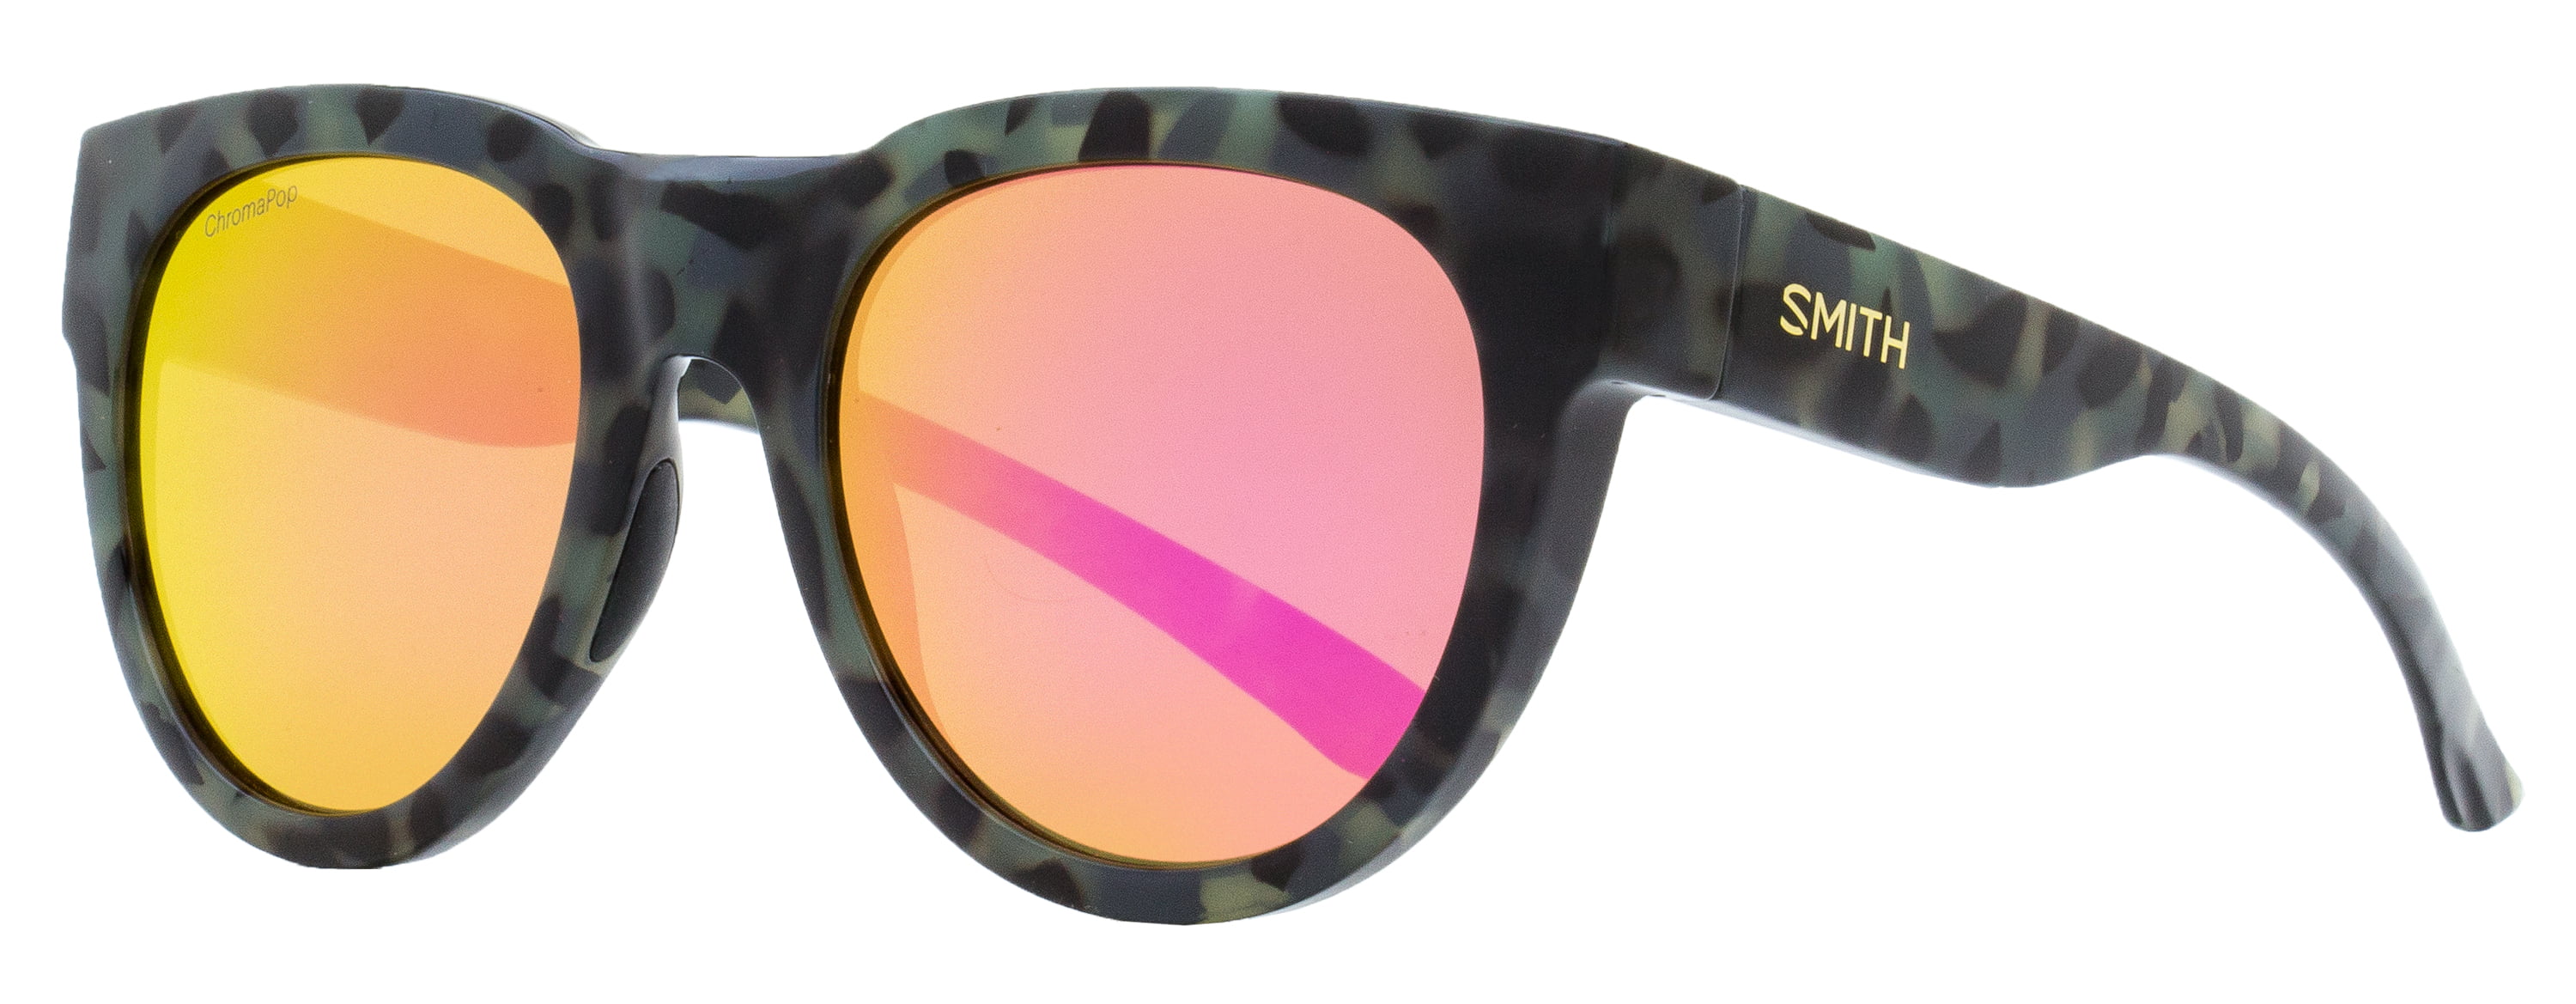 D&g Material Sunglasses